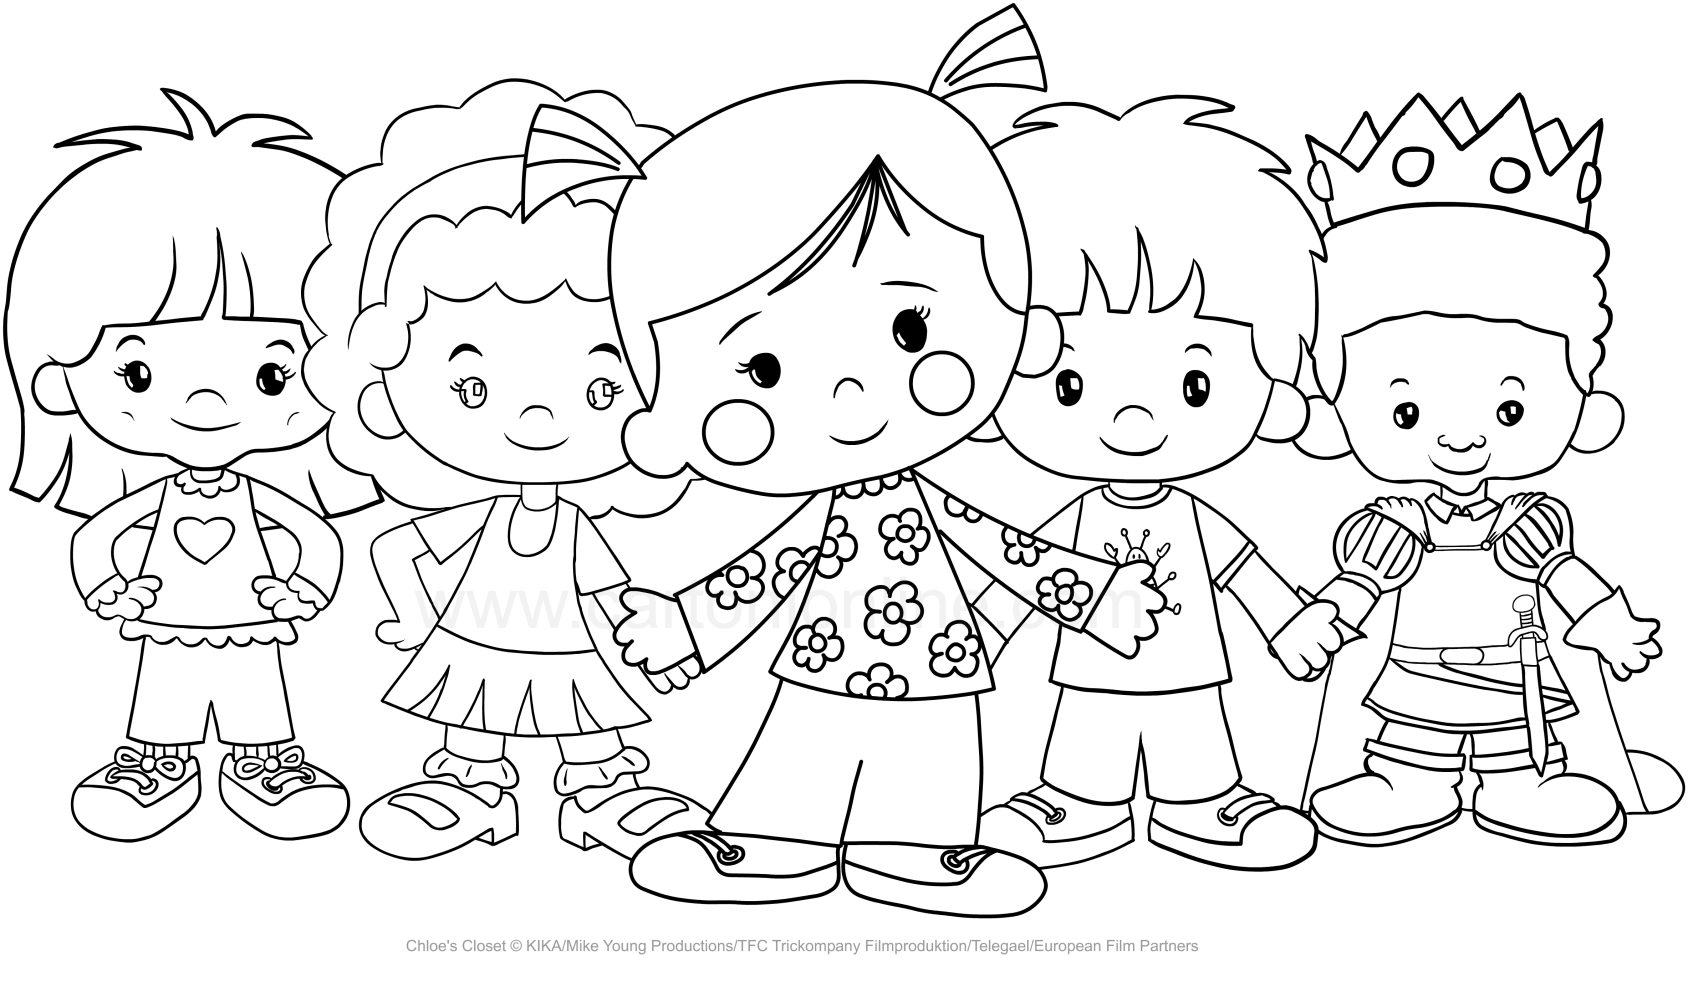 Desenho de Chlo e sus amigas (El armrio de Chloe) para impresso e colorir